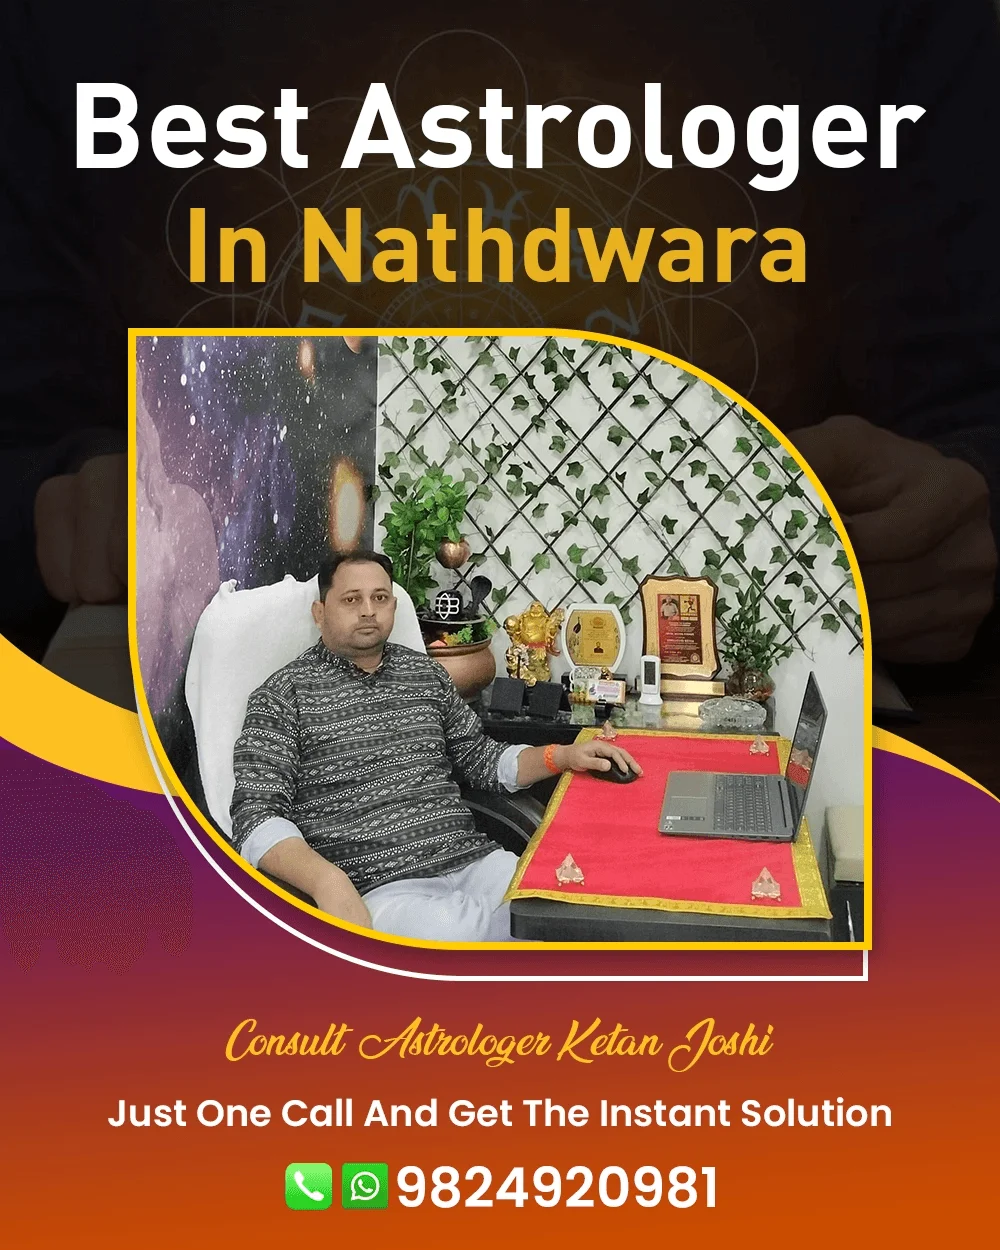 Best Astrologer In Nathdwara